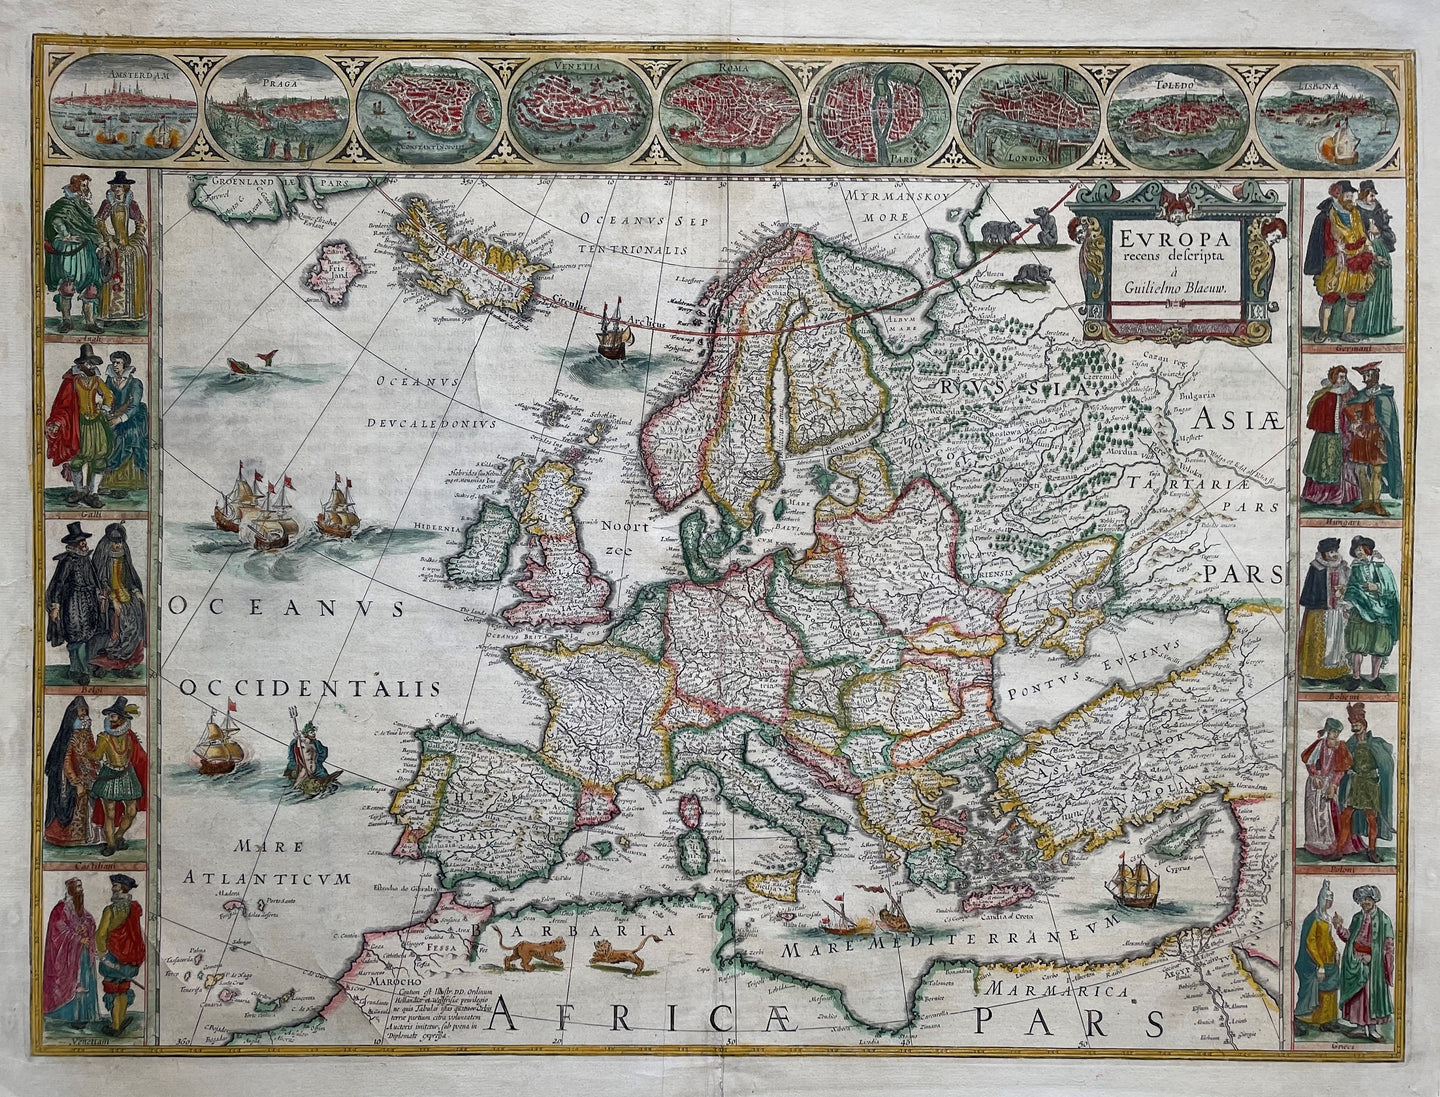 Europa Europe - Willem Jansz Blaeu - 1642